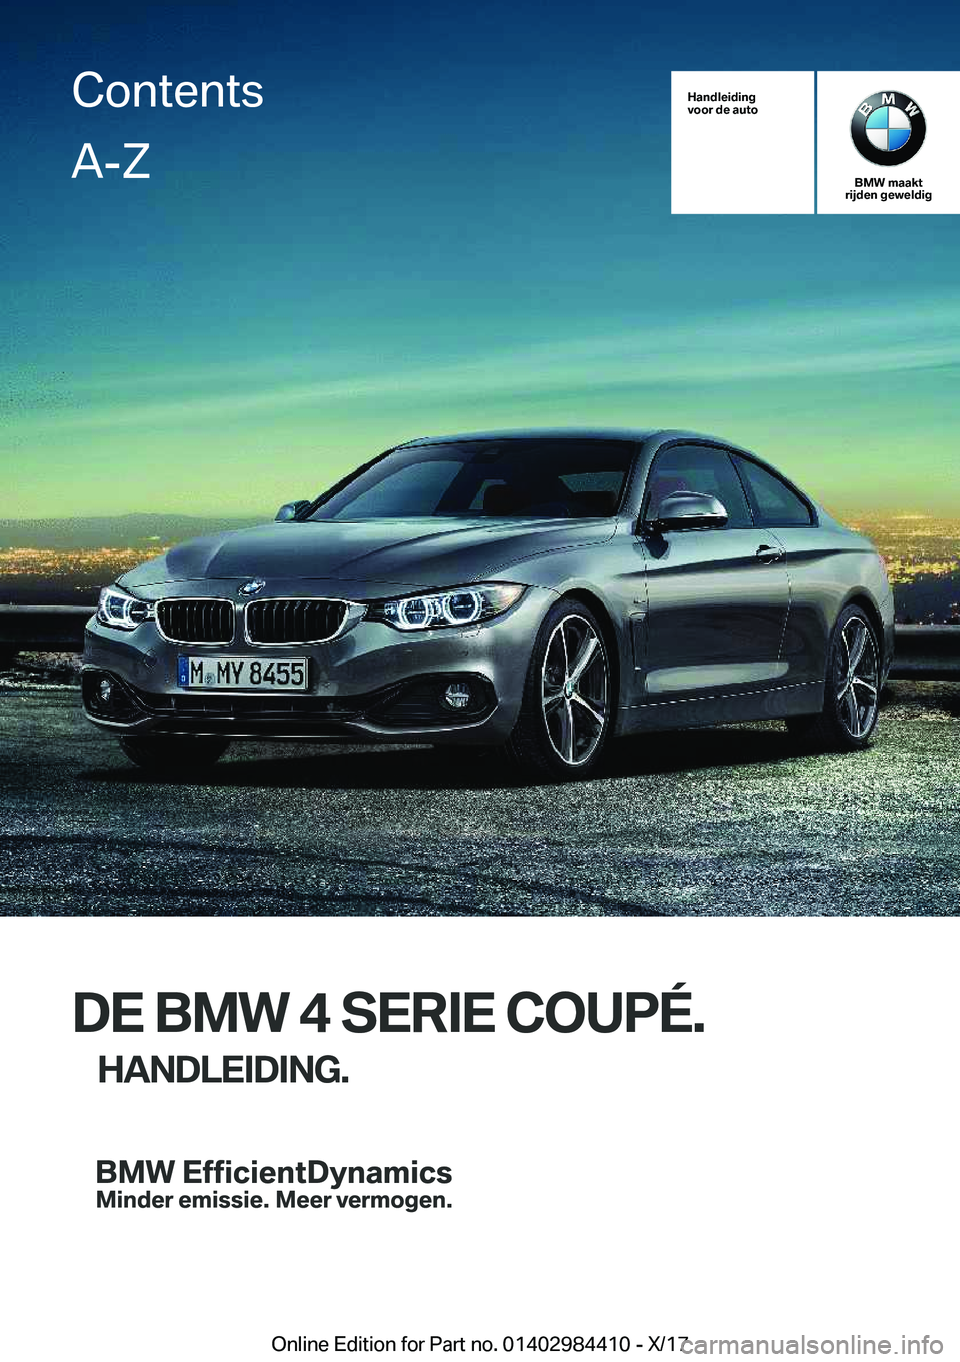 BMW 4 SERIES COUPE 2018  Instructieboekjes (in Dutch) �H�a�n�d�l�e�i�d�i�n�g
�v�o�o�r��d�e��a�u�t�o
�B�M�W��m�a�a�k�t
�r�i�j�d�e�n��g�e�w�e�l�d�i�g
�D�E��B�M�W��4��S�E�R�I�E��C�O�U�P�